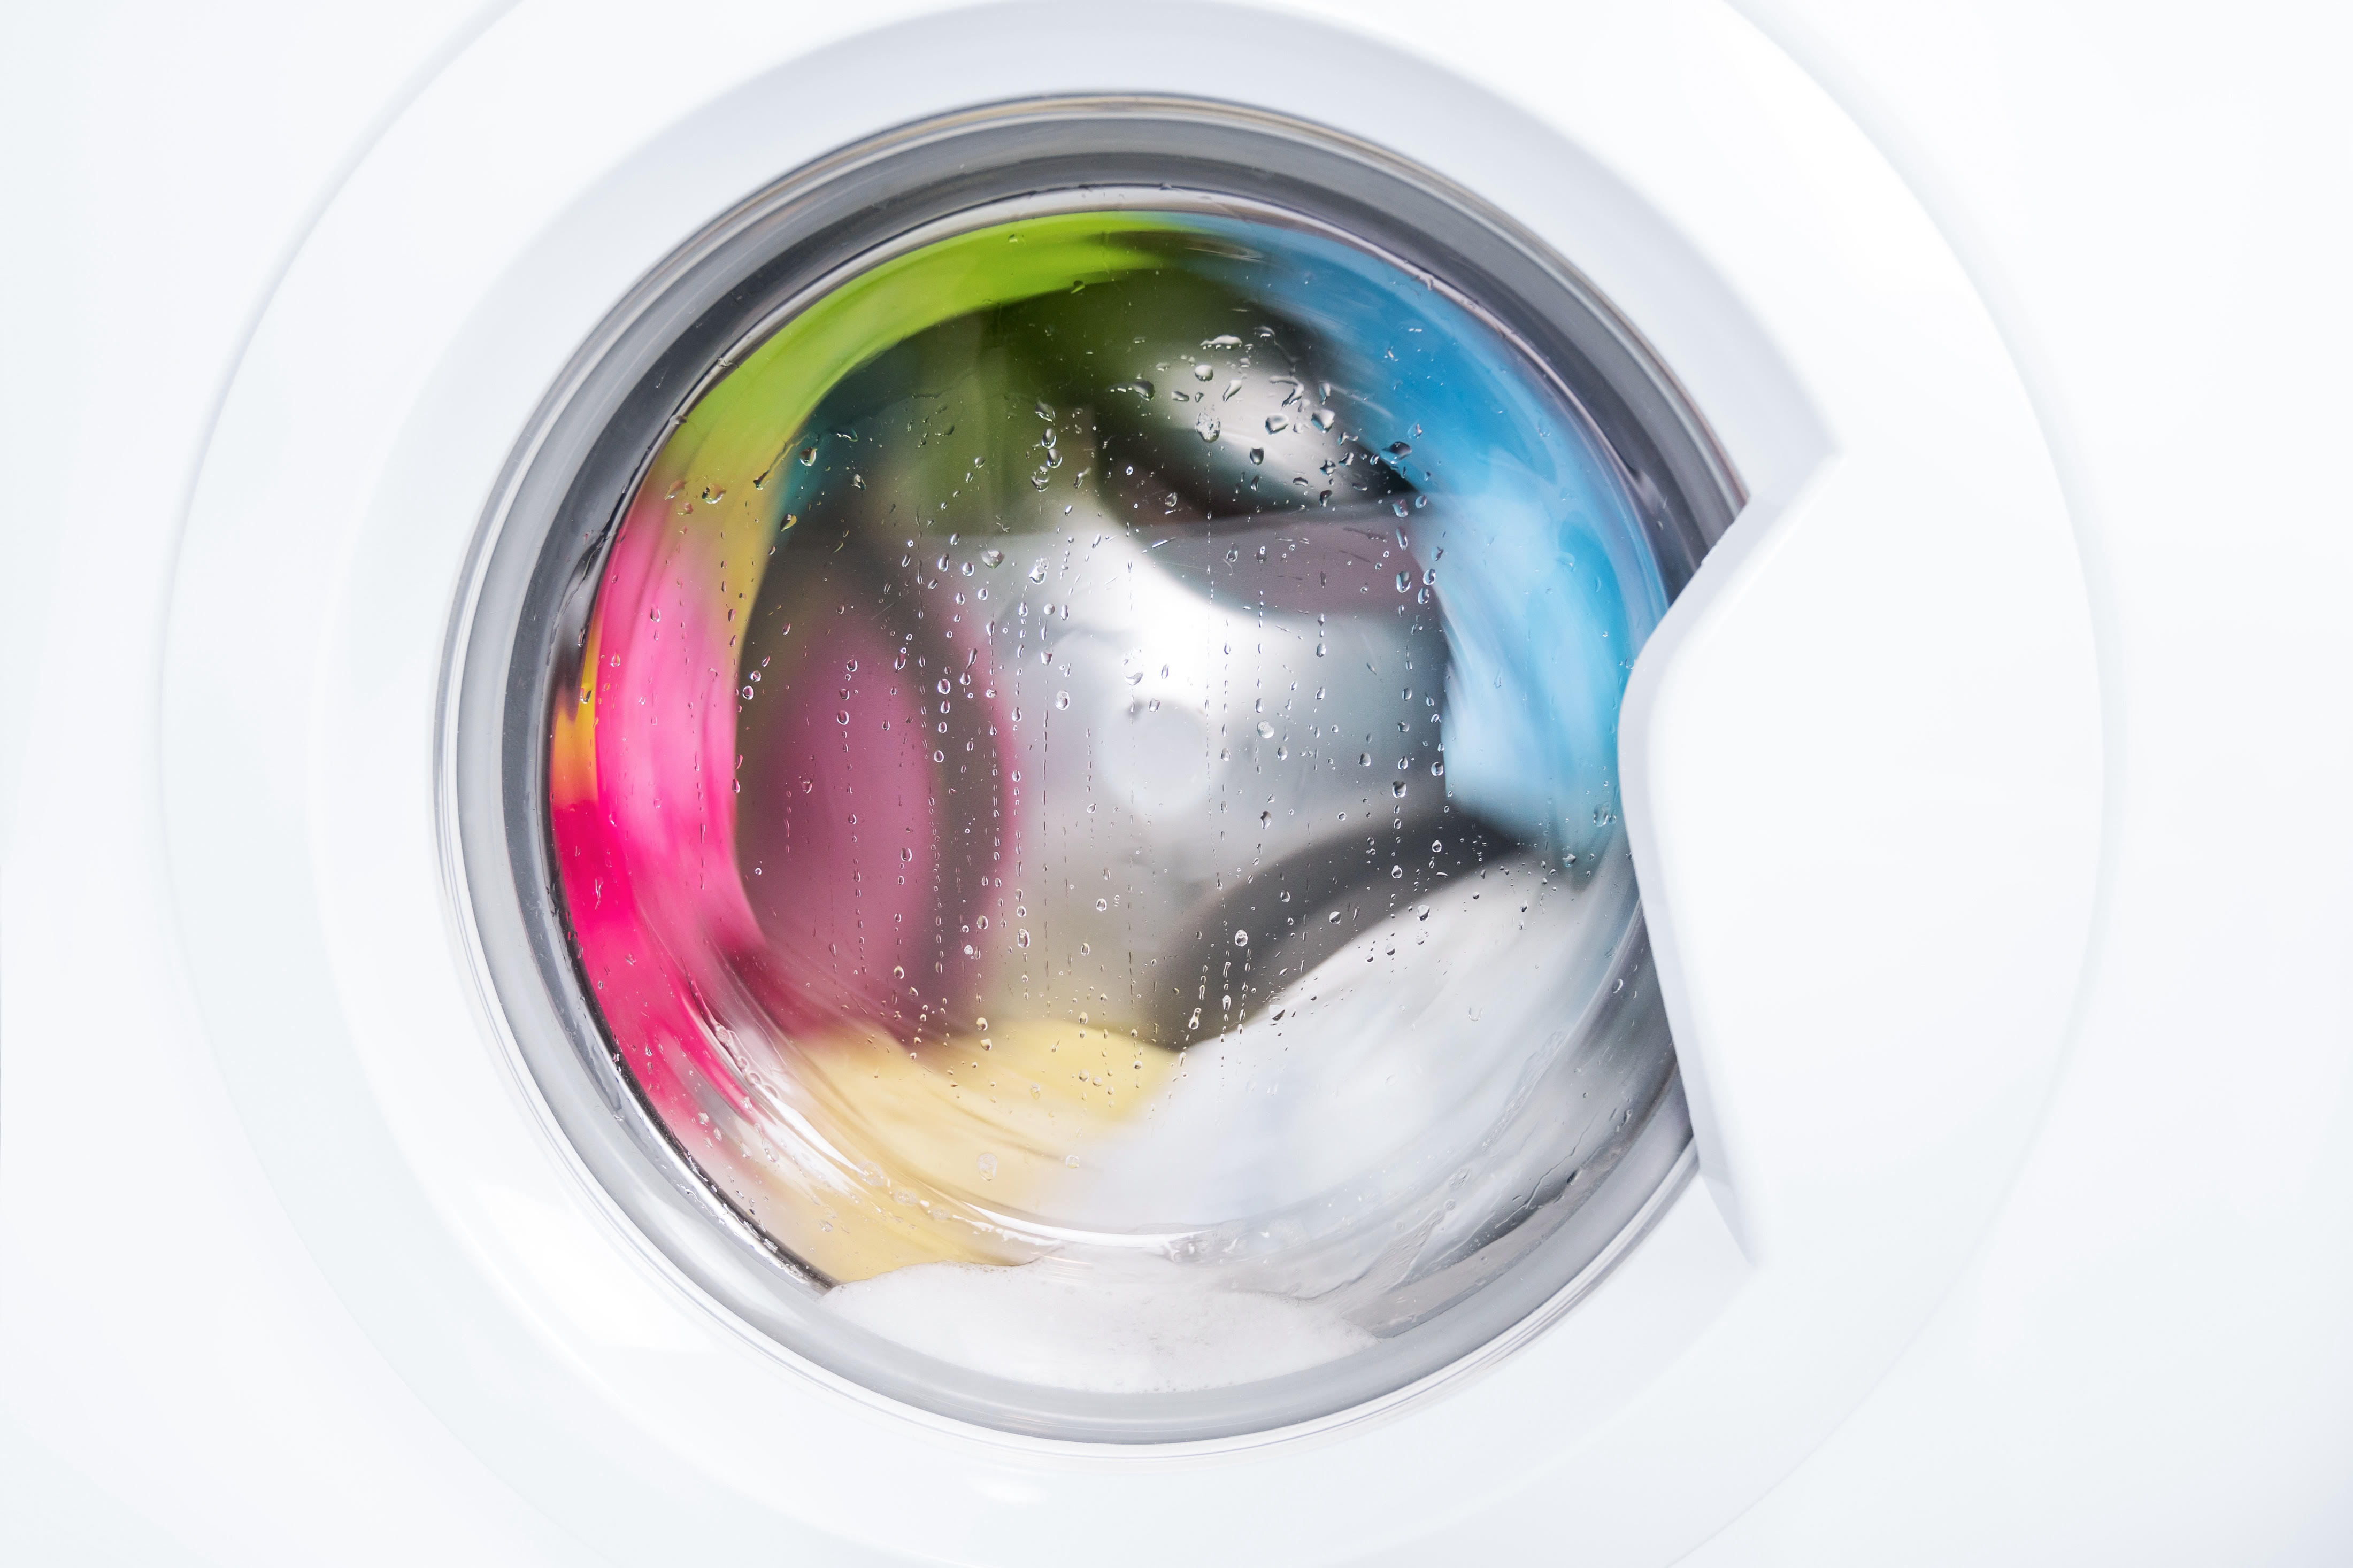 Washing Machine representing clean trustworthy data